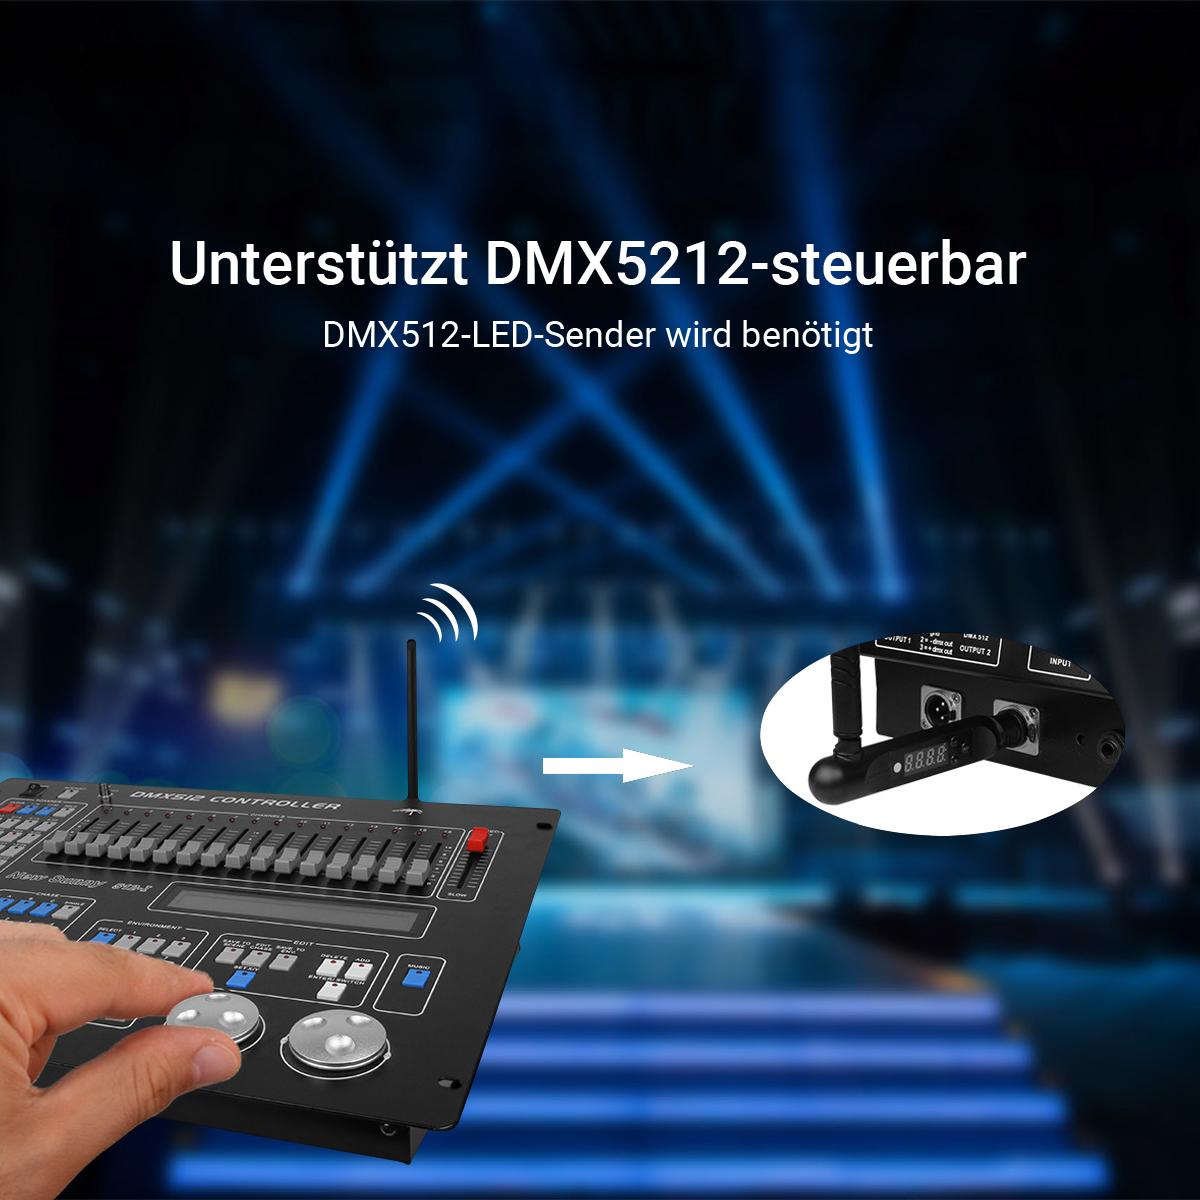 MiBoxer RGB+CCT LED Einbaustrahler rund weiss 18W Ø180mm 2.4GHz WiFi ready FUT065